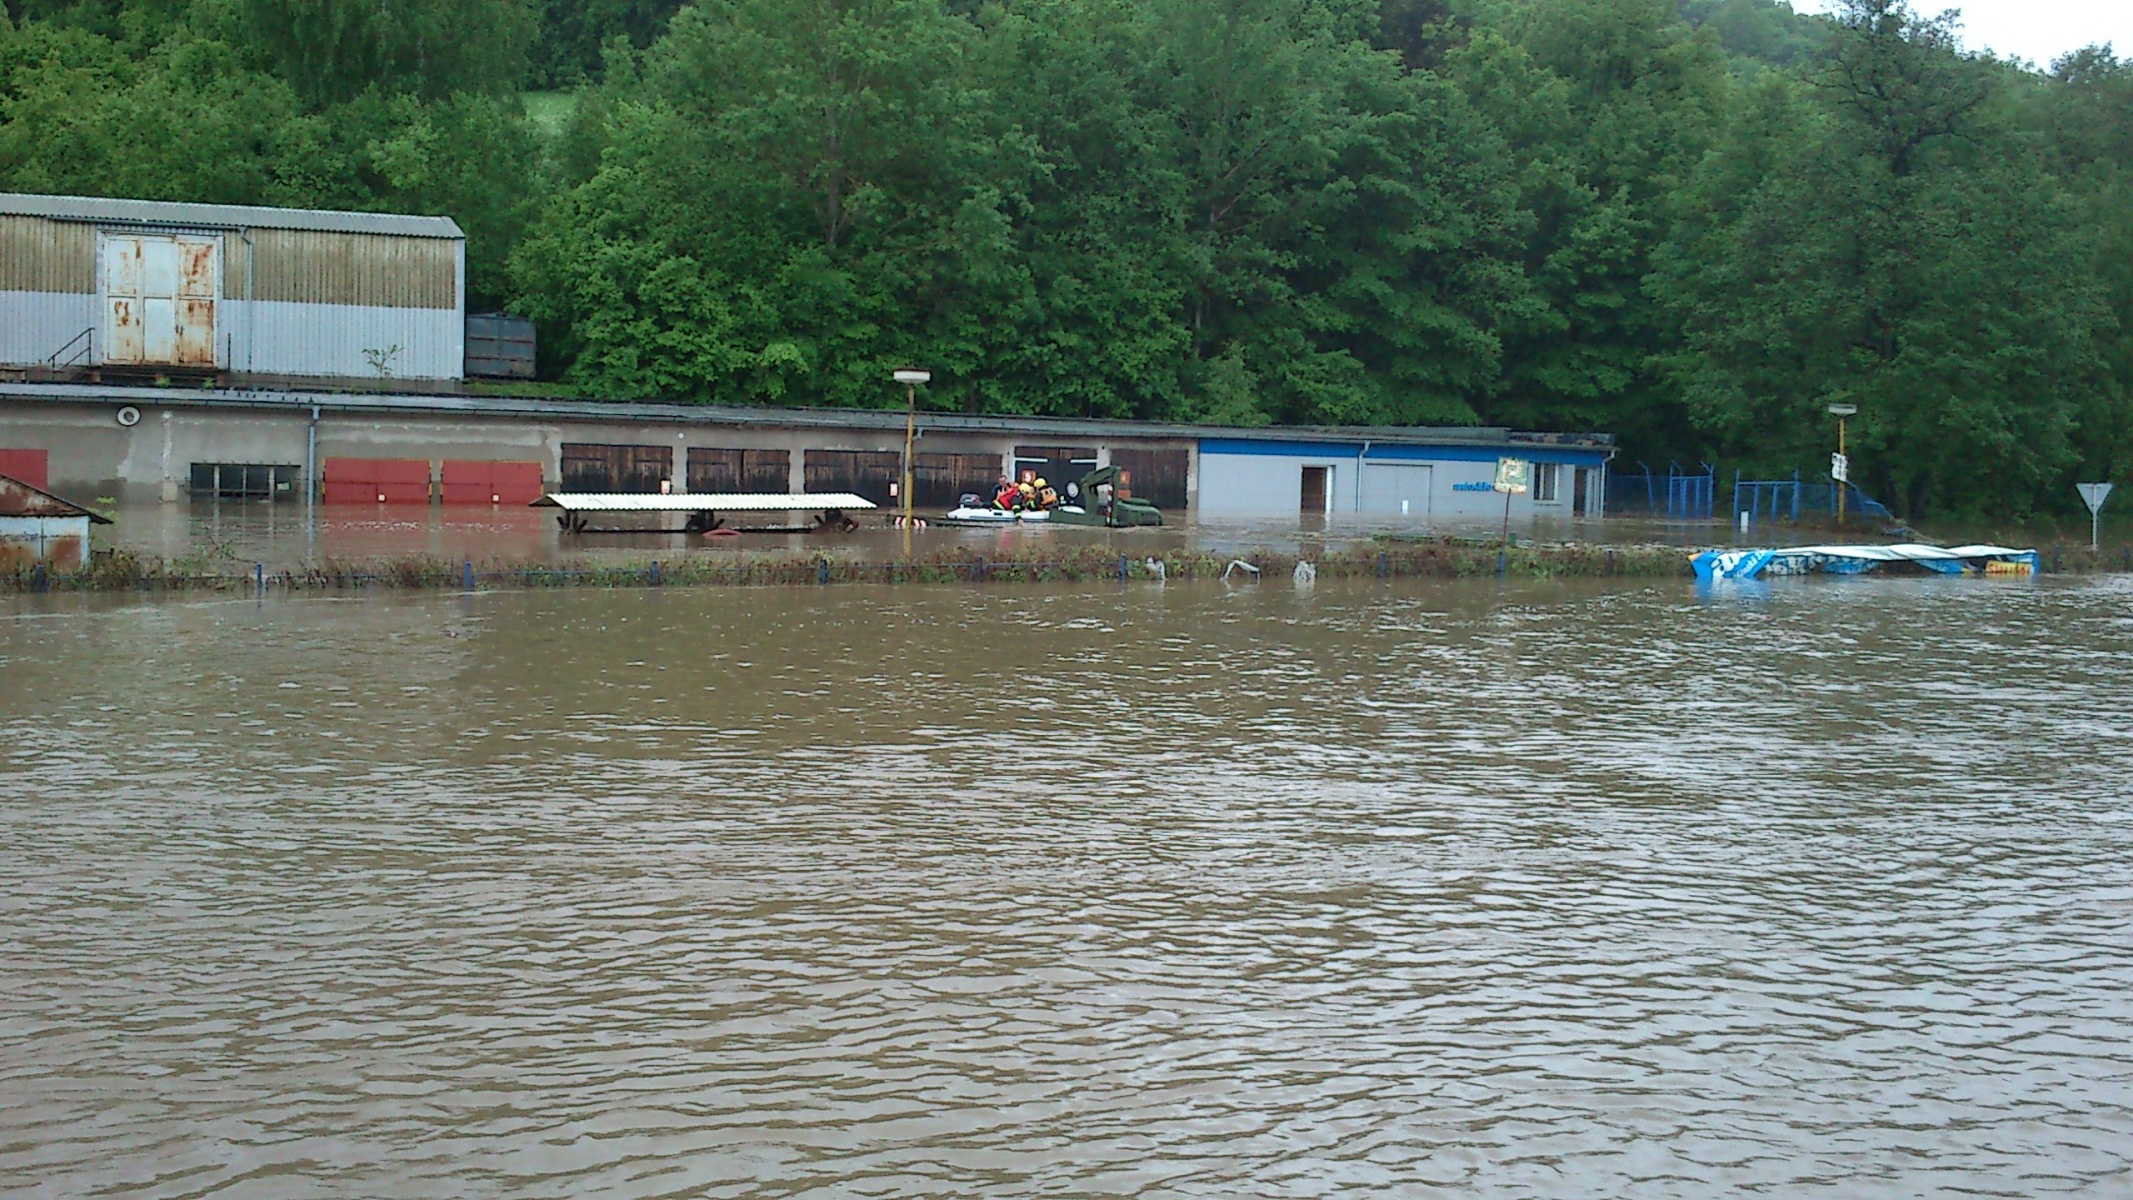 4 Záchrana čtyř osob ze zaplaveného auta, Český Krumlov - 2. 6. 2013 (4).jpg